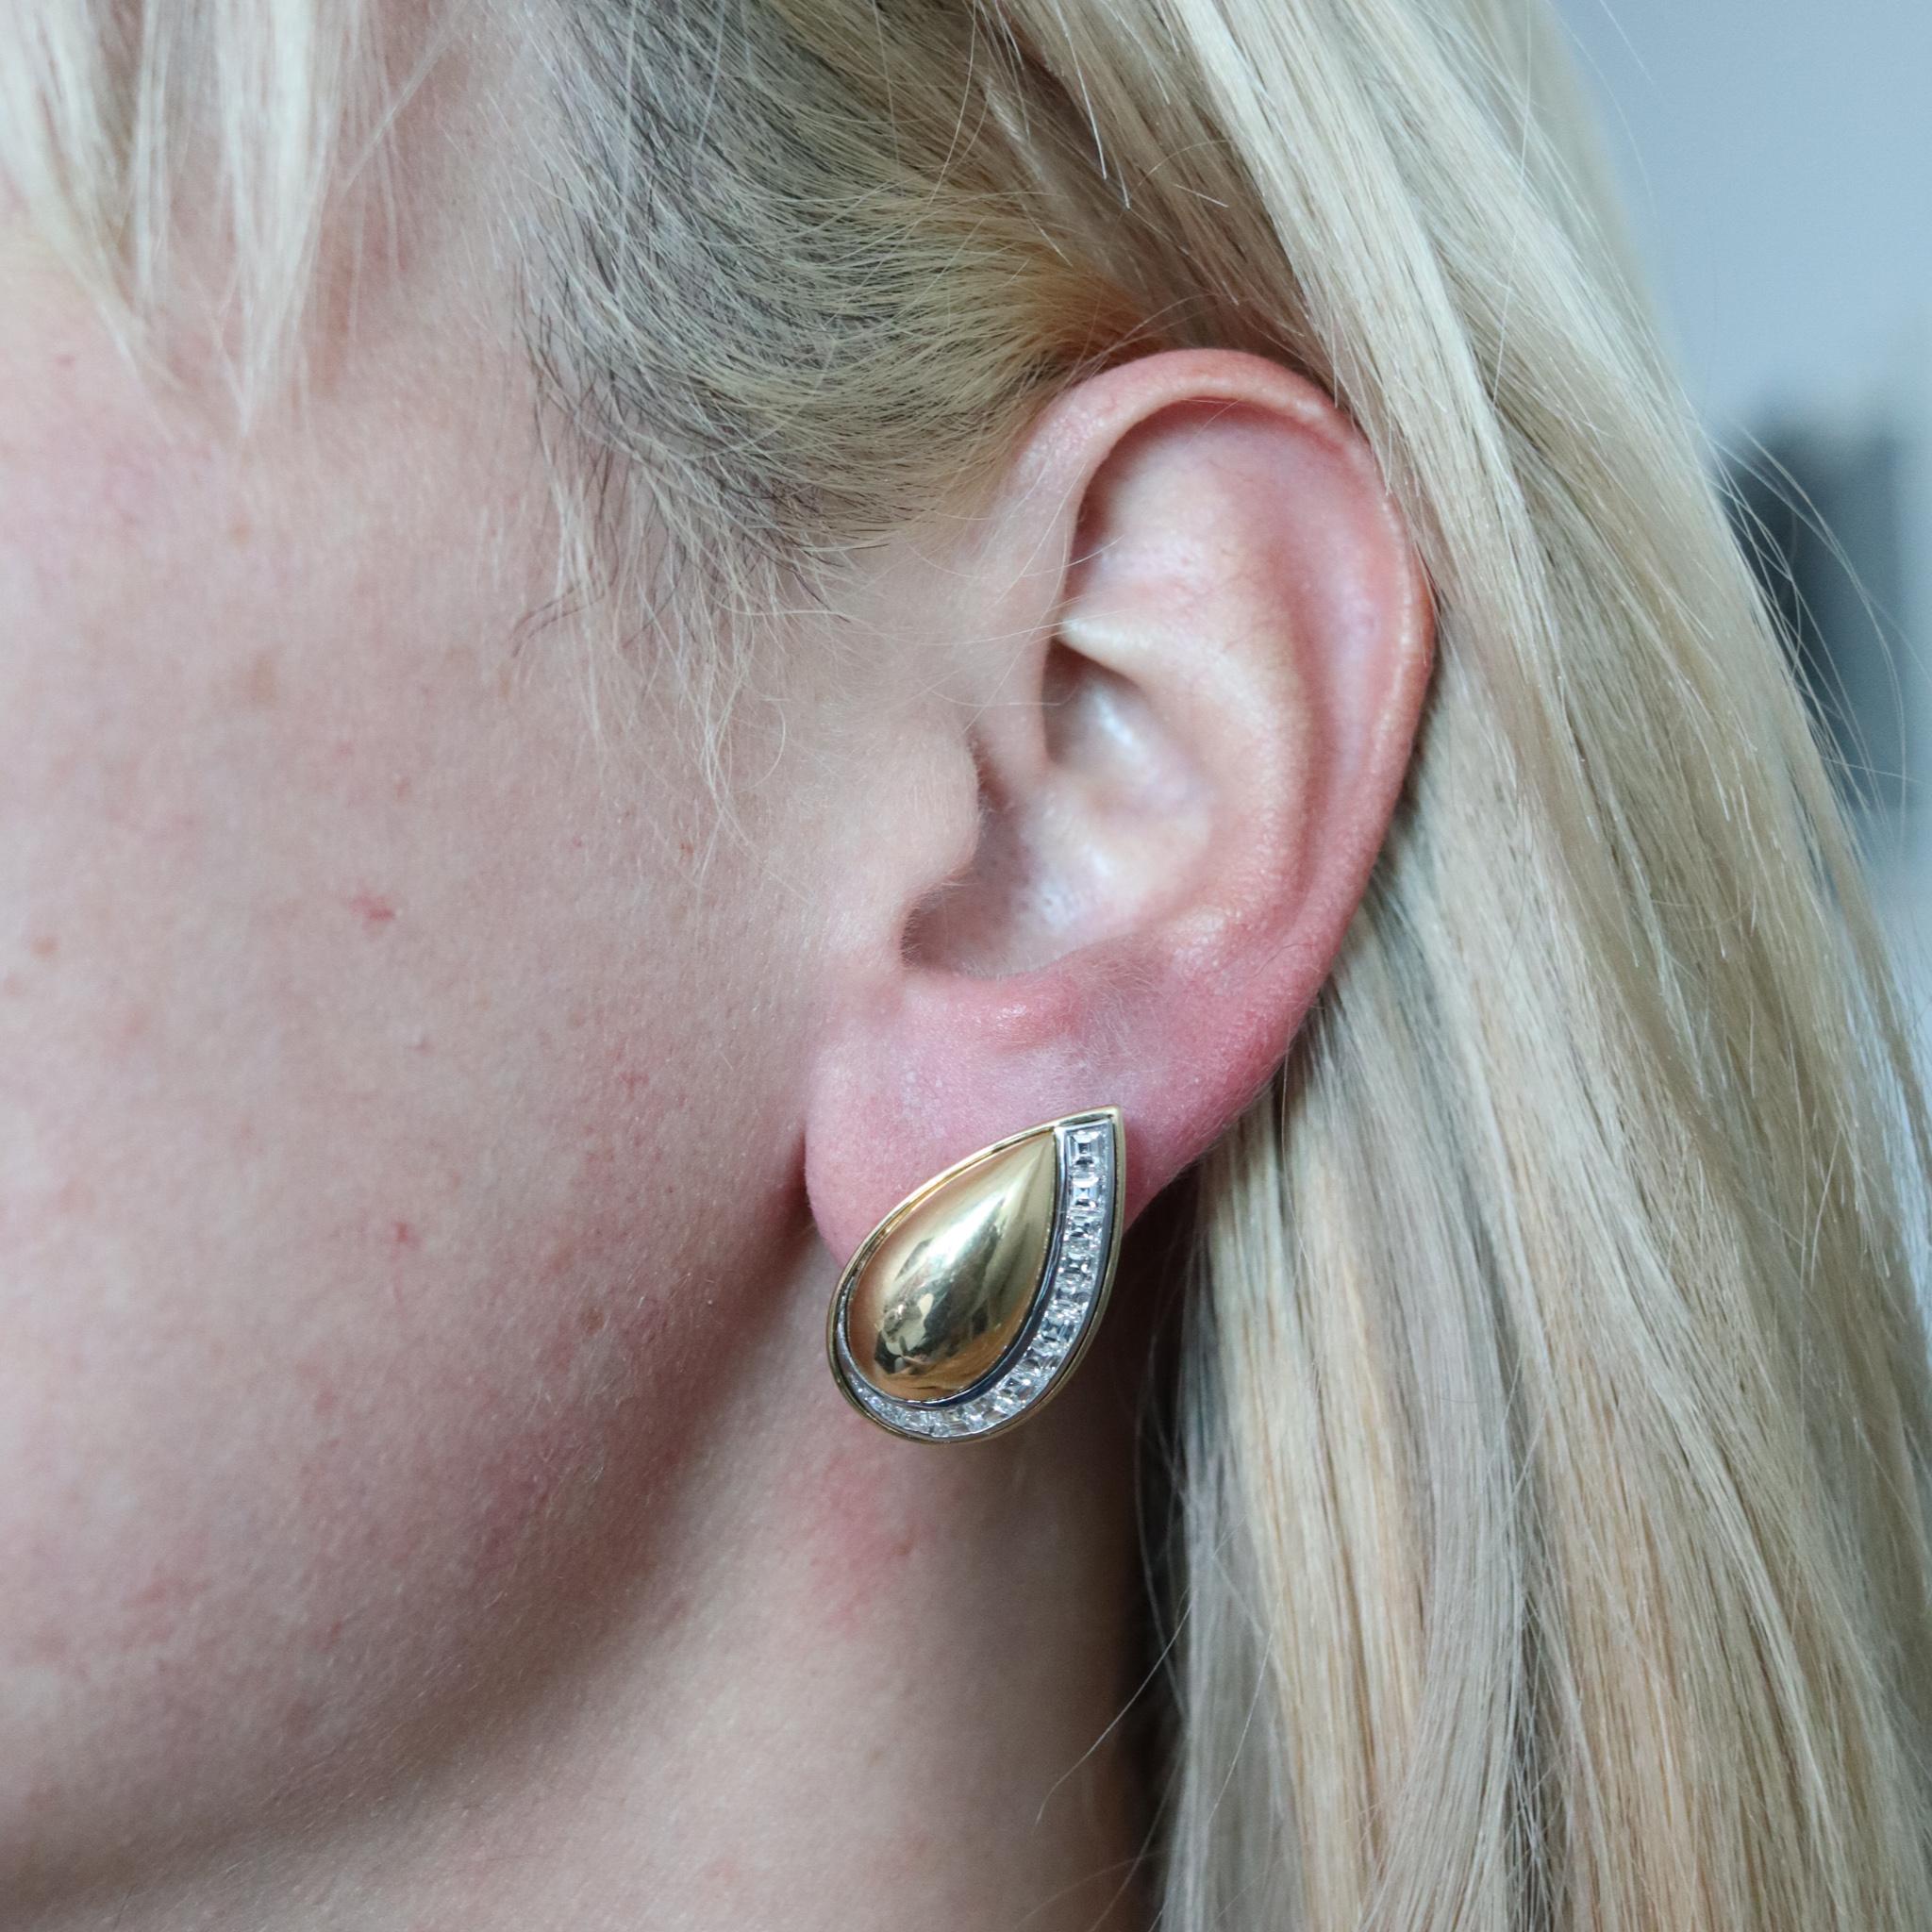 hemmerle earrings